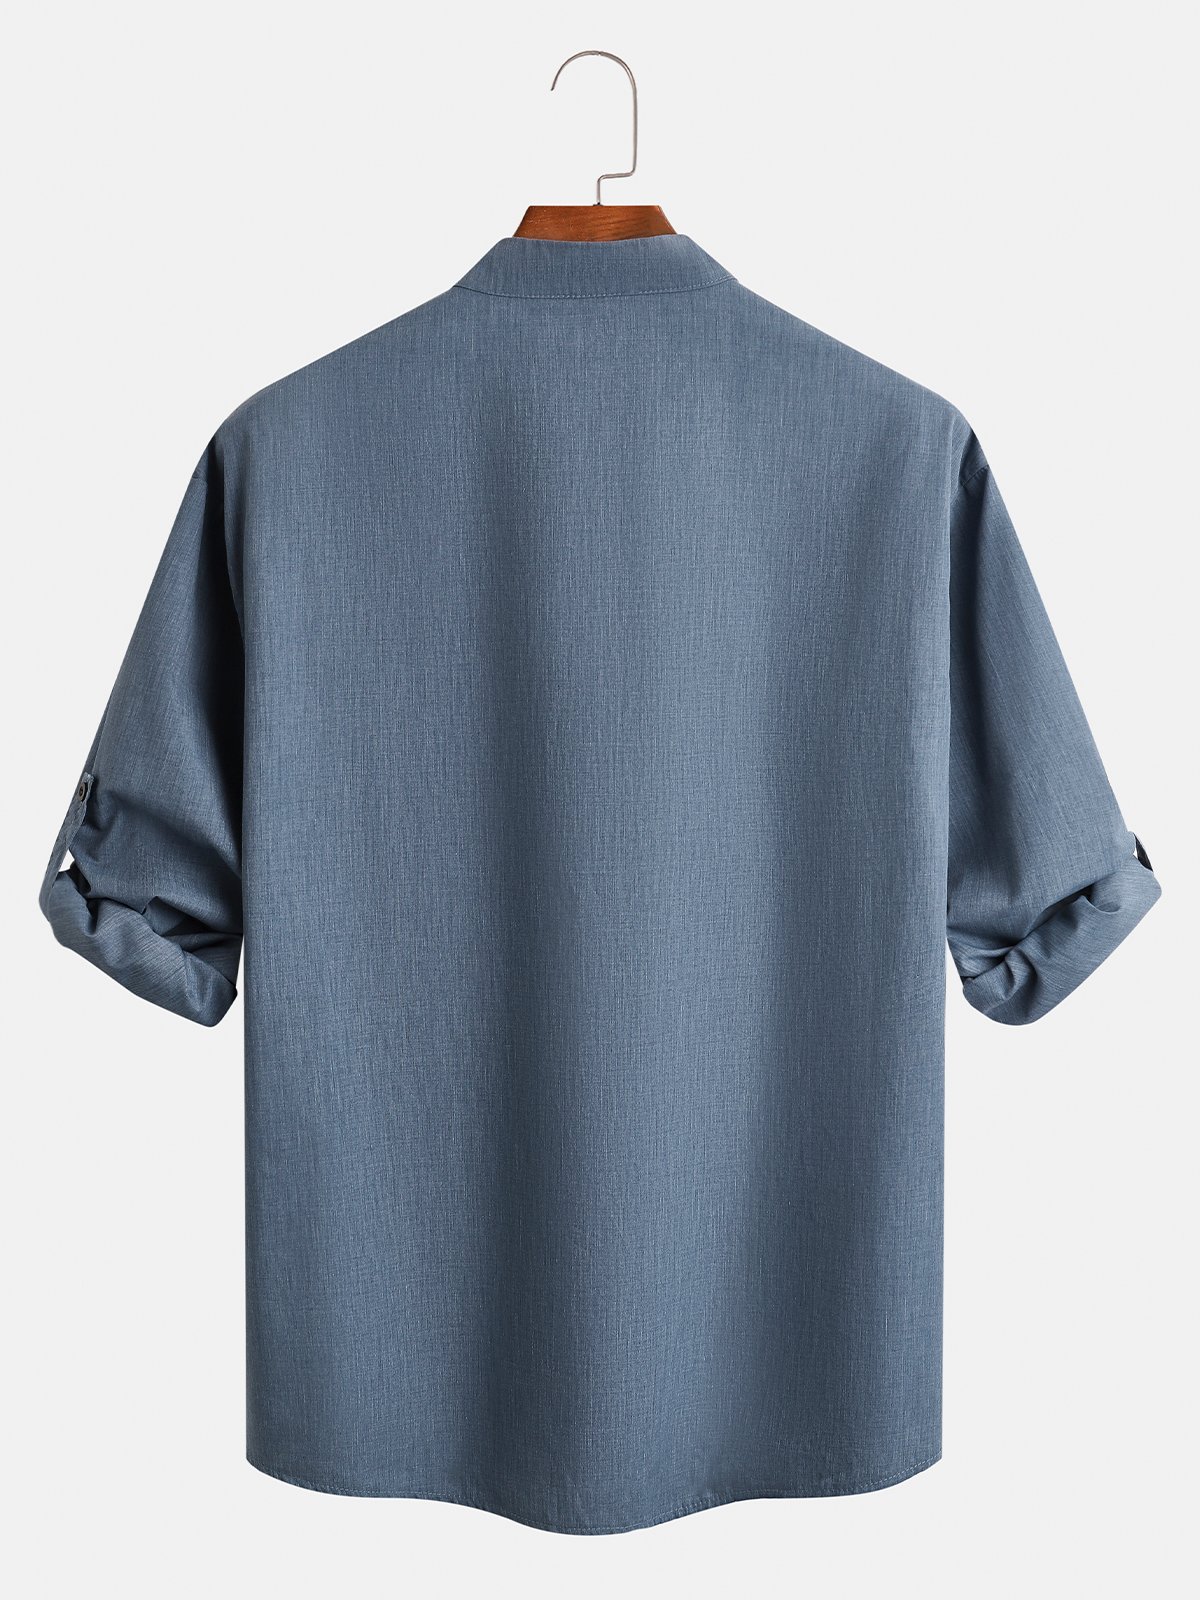 Hardaddy Plain Long Sleeve Chest Pocket Casual Henley Shirt